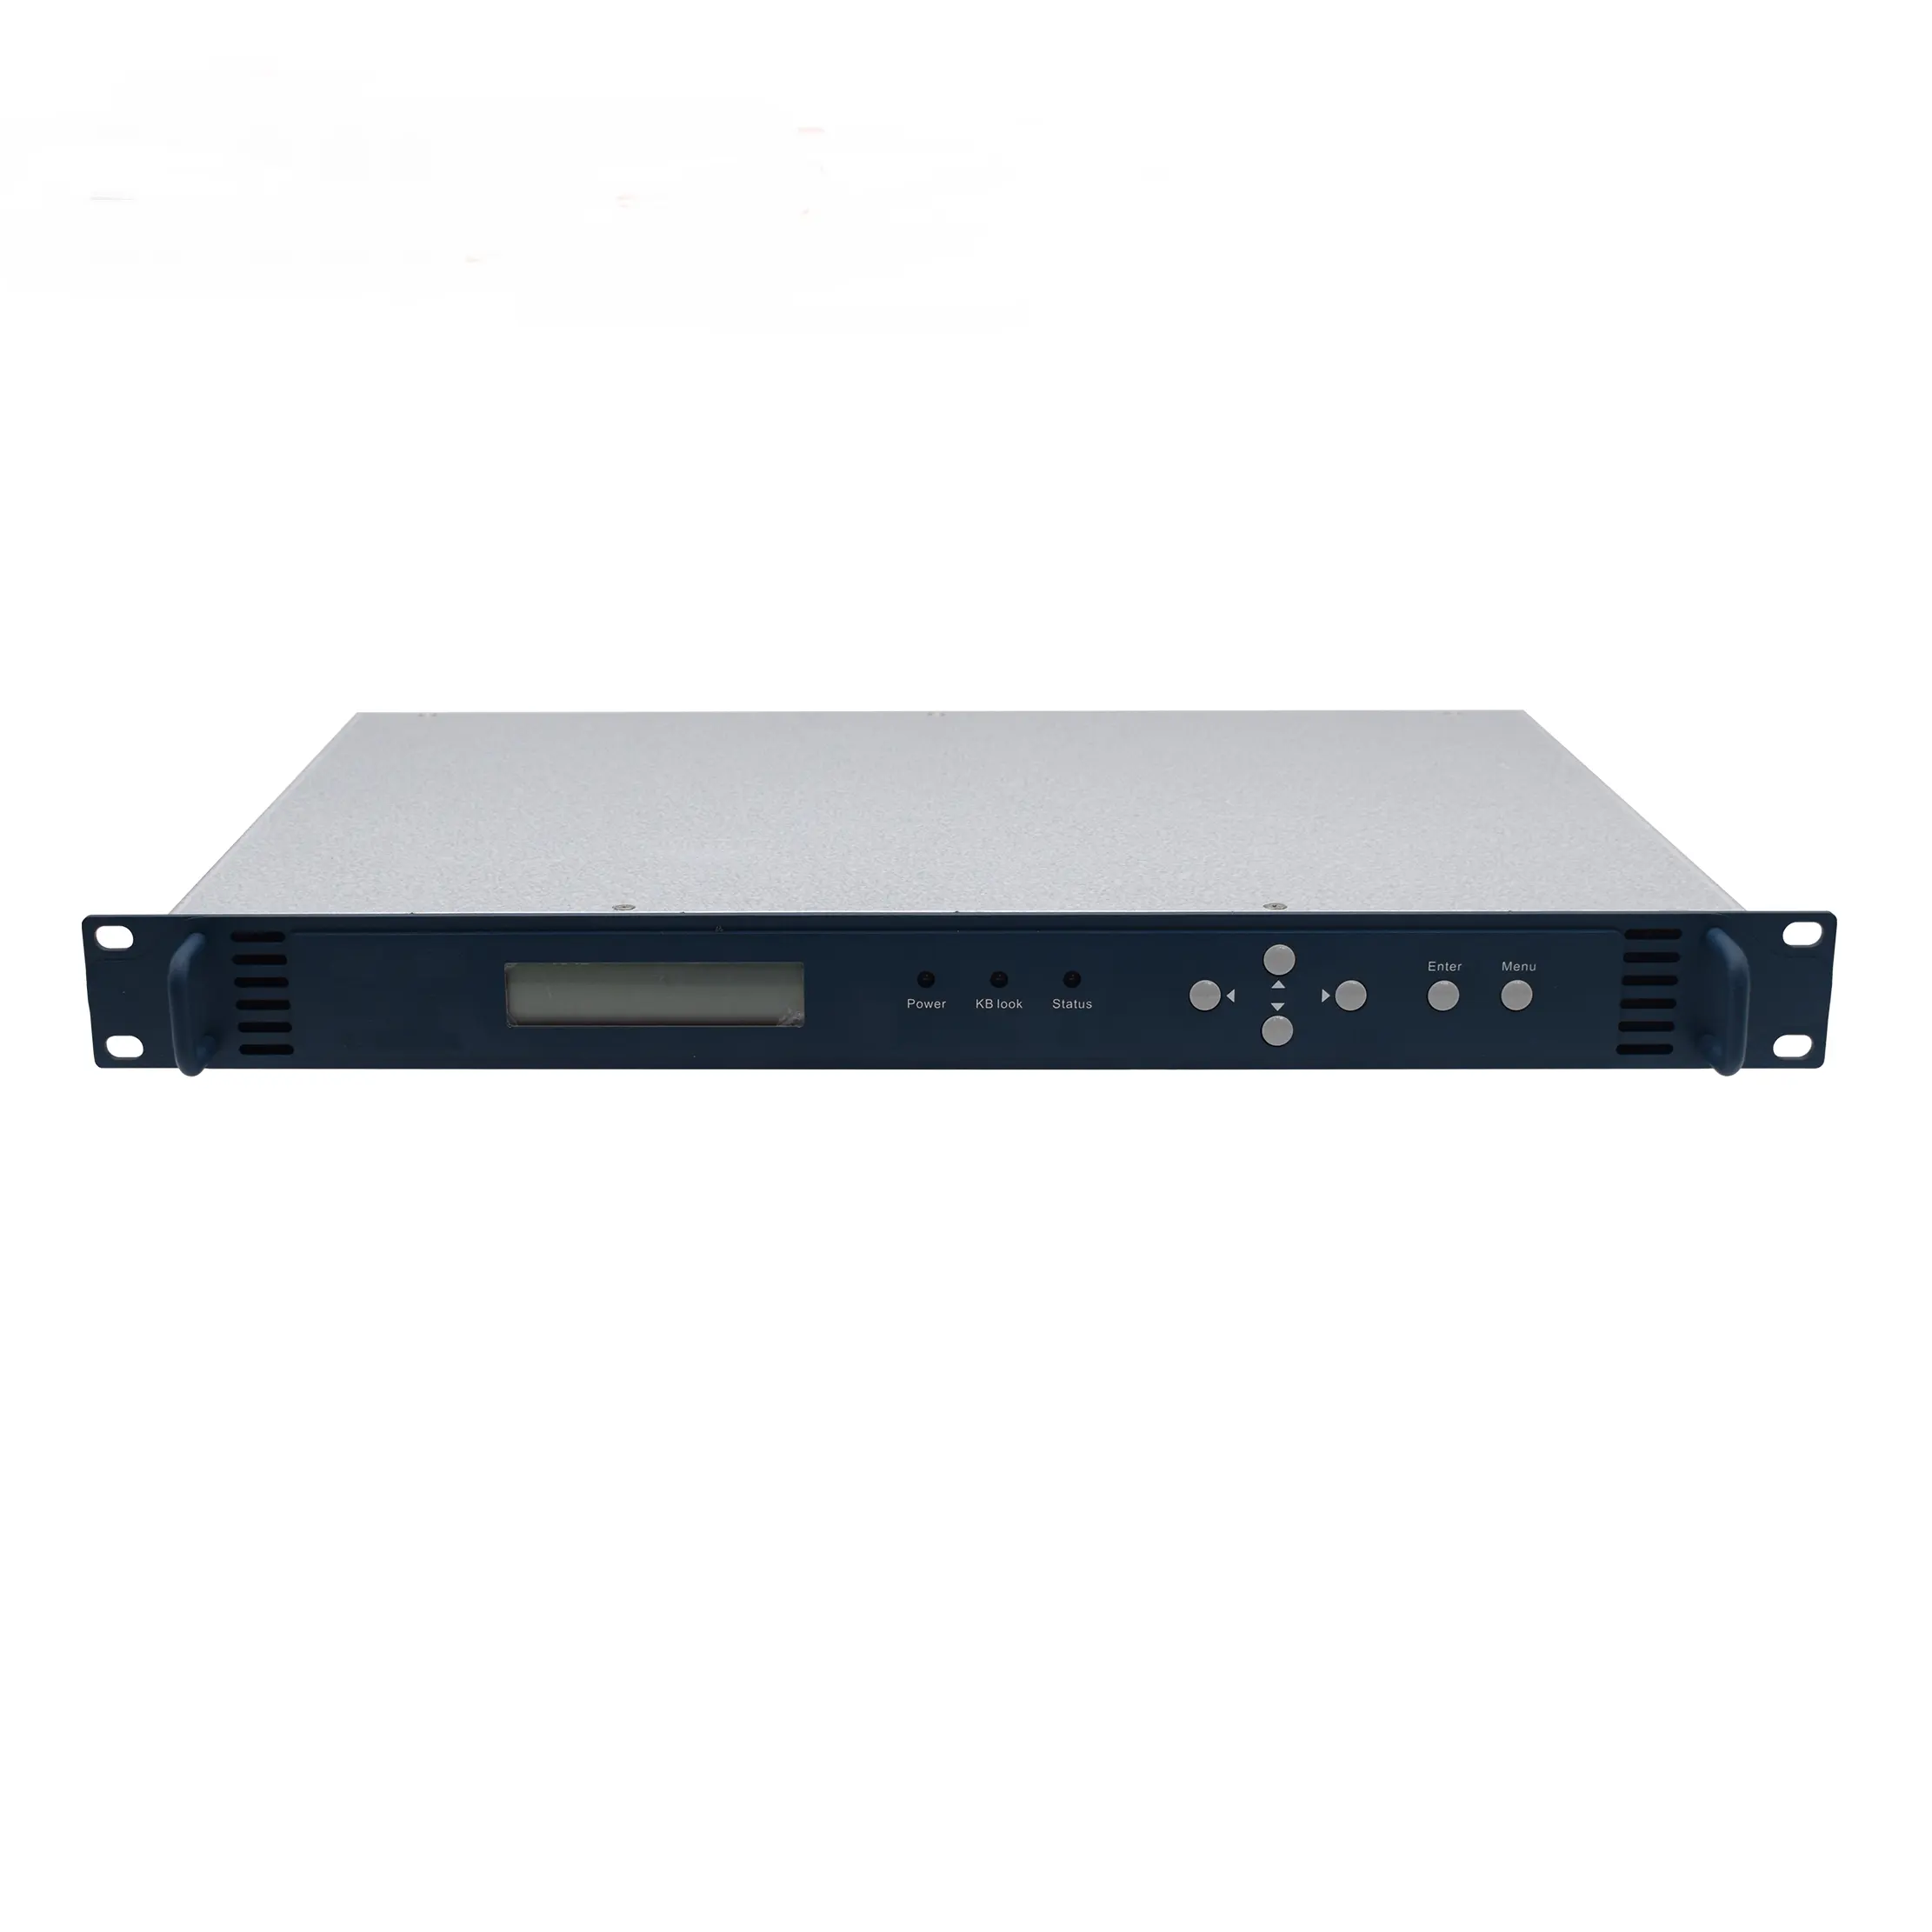 Mepg-2 canale singolo h.264 HD video to ethernet converter isdb-t tv sistema encoder one reg